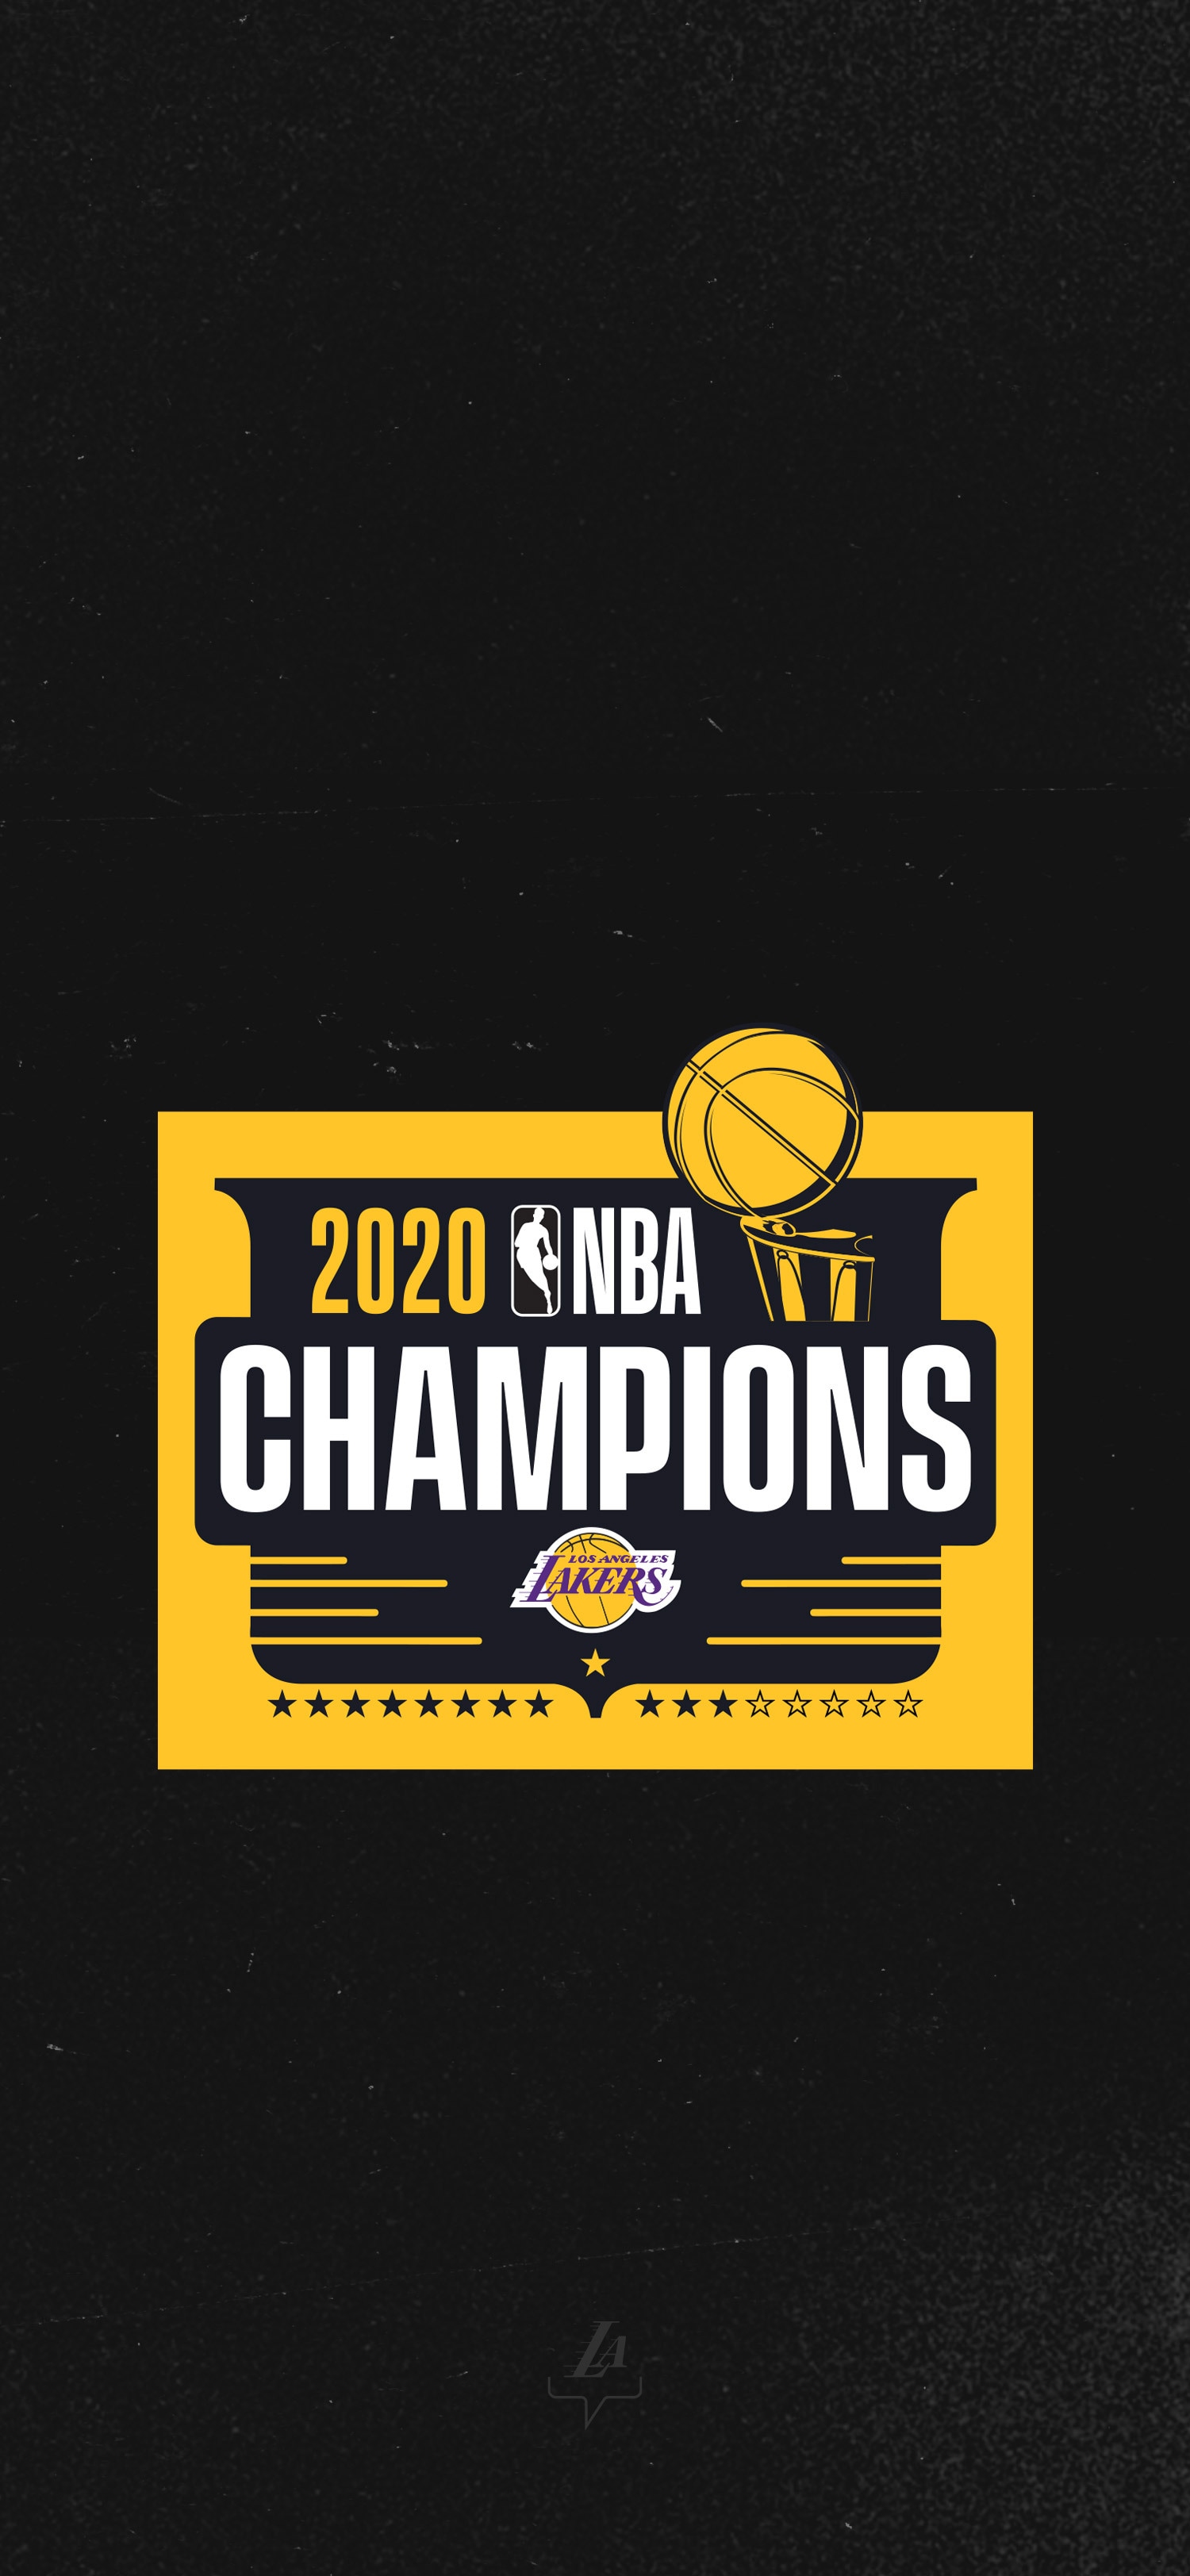 Lakers 2020 NBA Champions